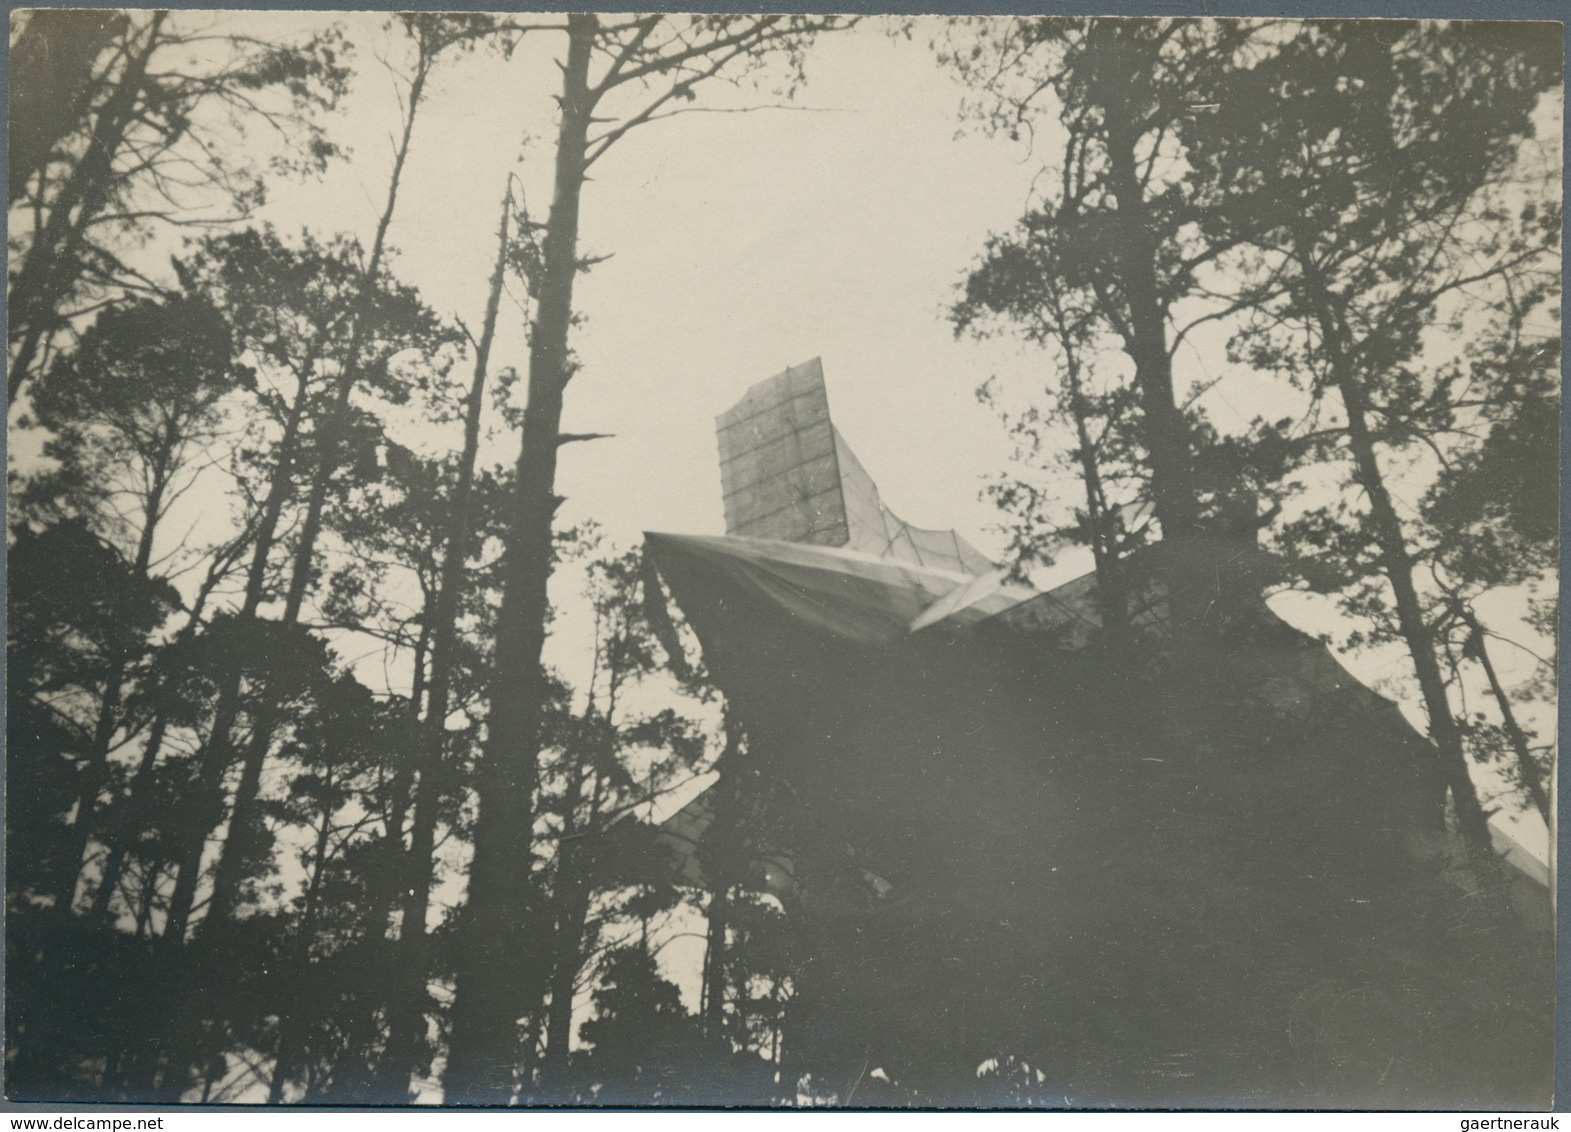 Thematik: Zeppelin / zeppelin: 1913 (ca). Rare, perhaps unique, collection of 22 original photograph